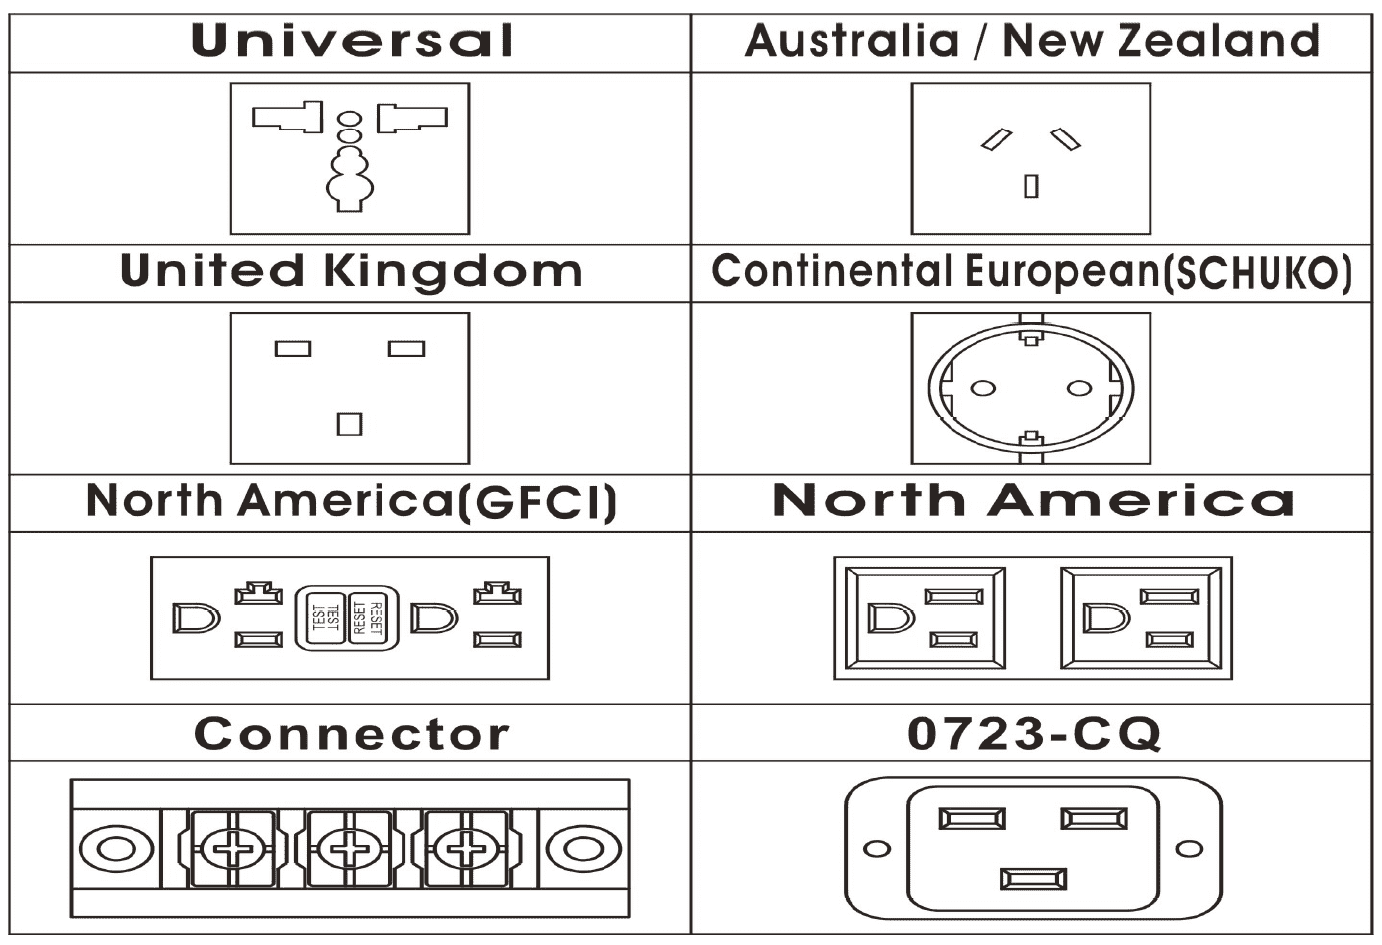 Outlet Sockets Inverter Universal AU NZ United Kingdom North America